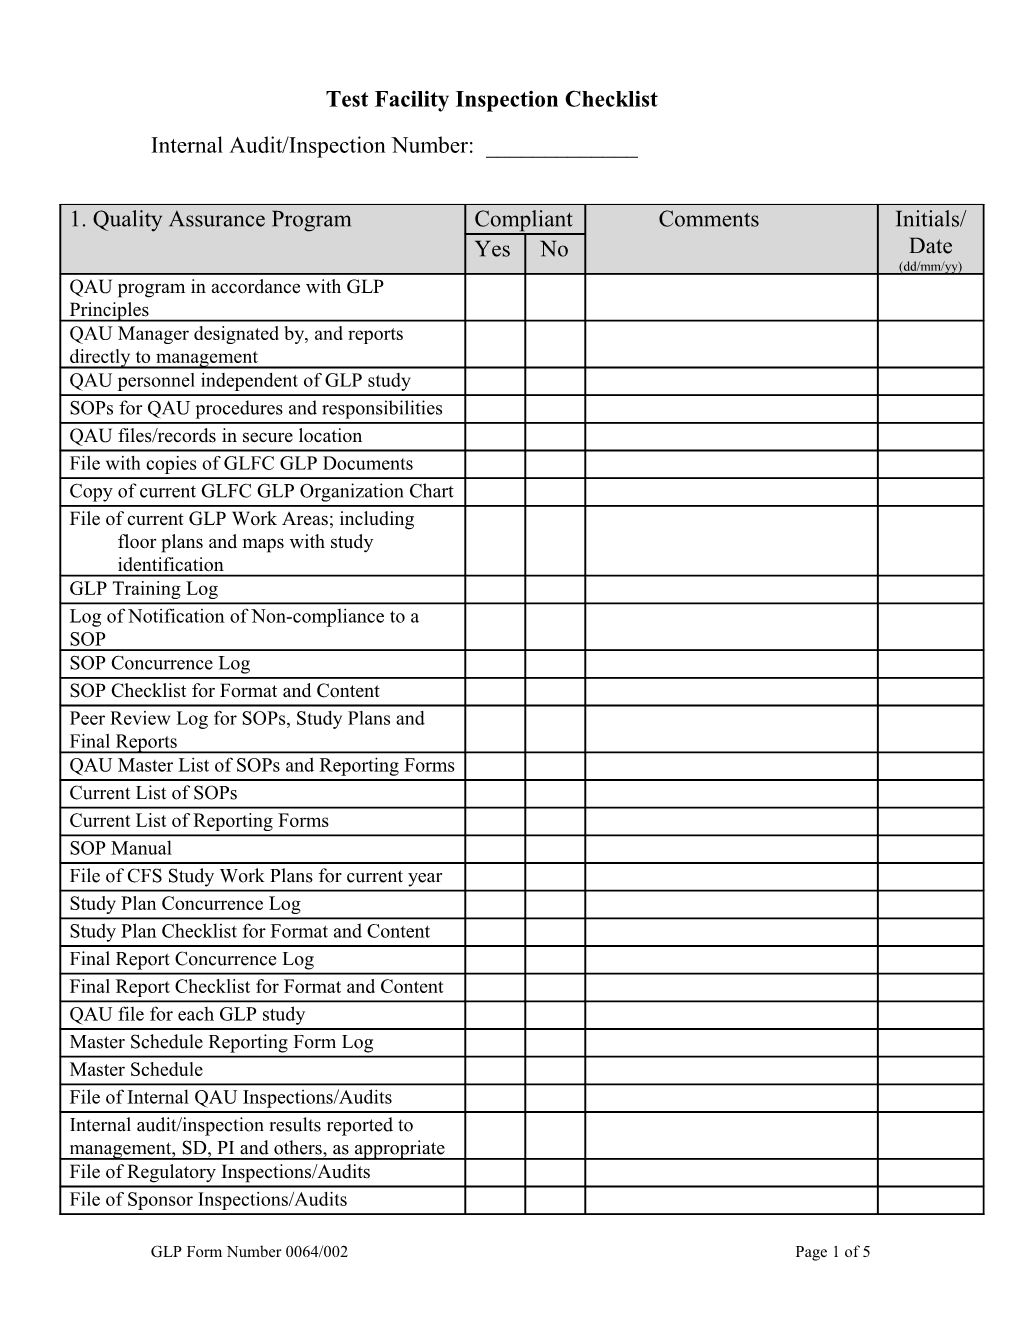 Test Facility Inspection Checklist